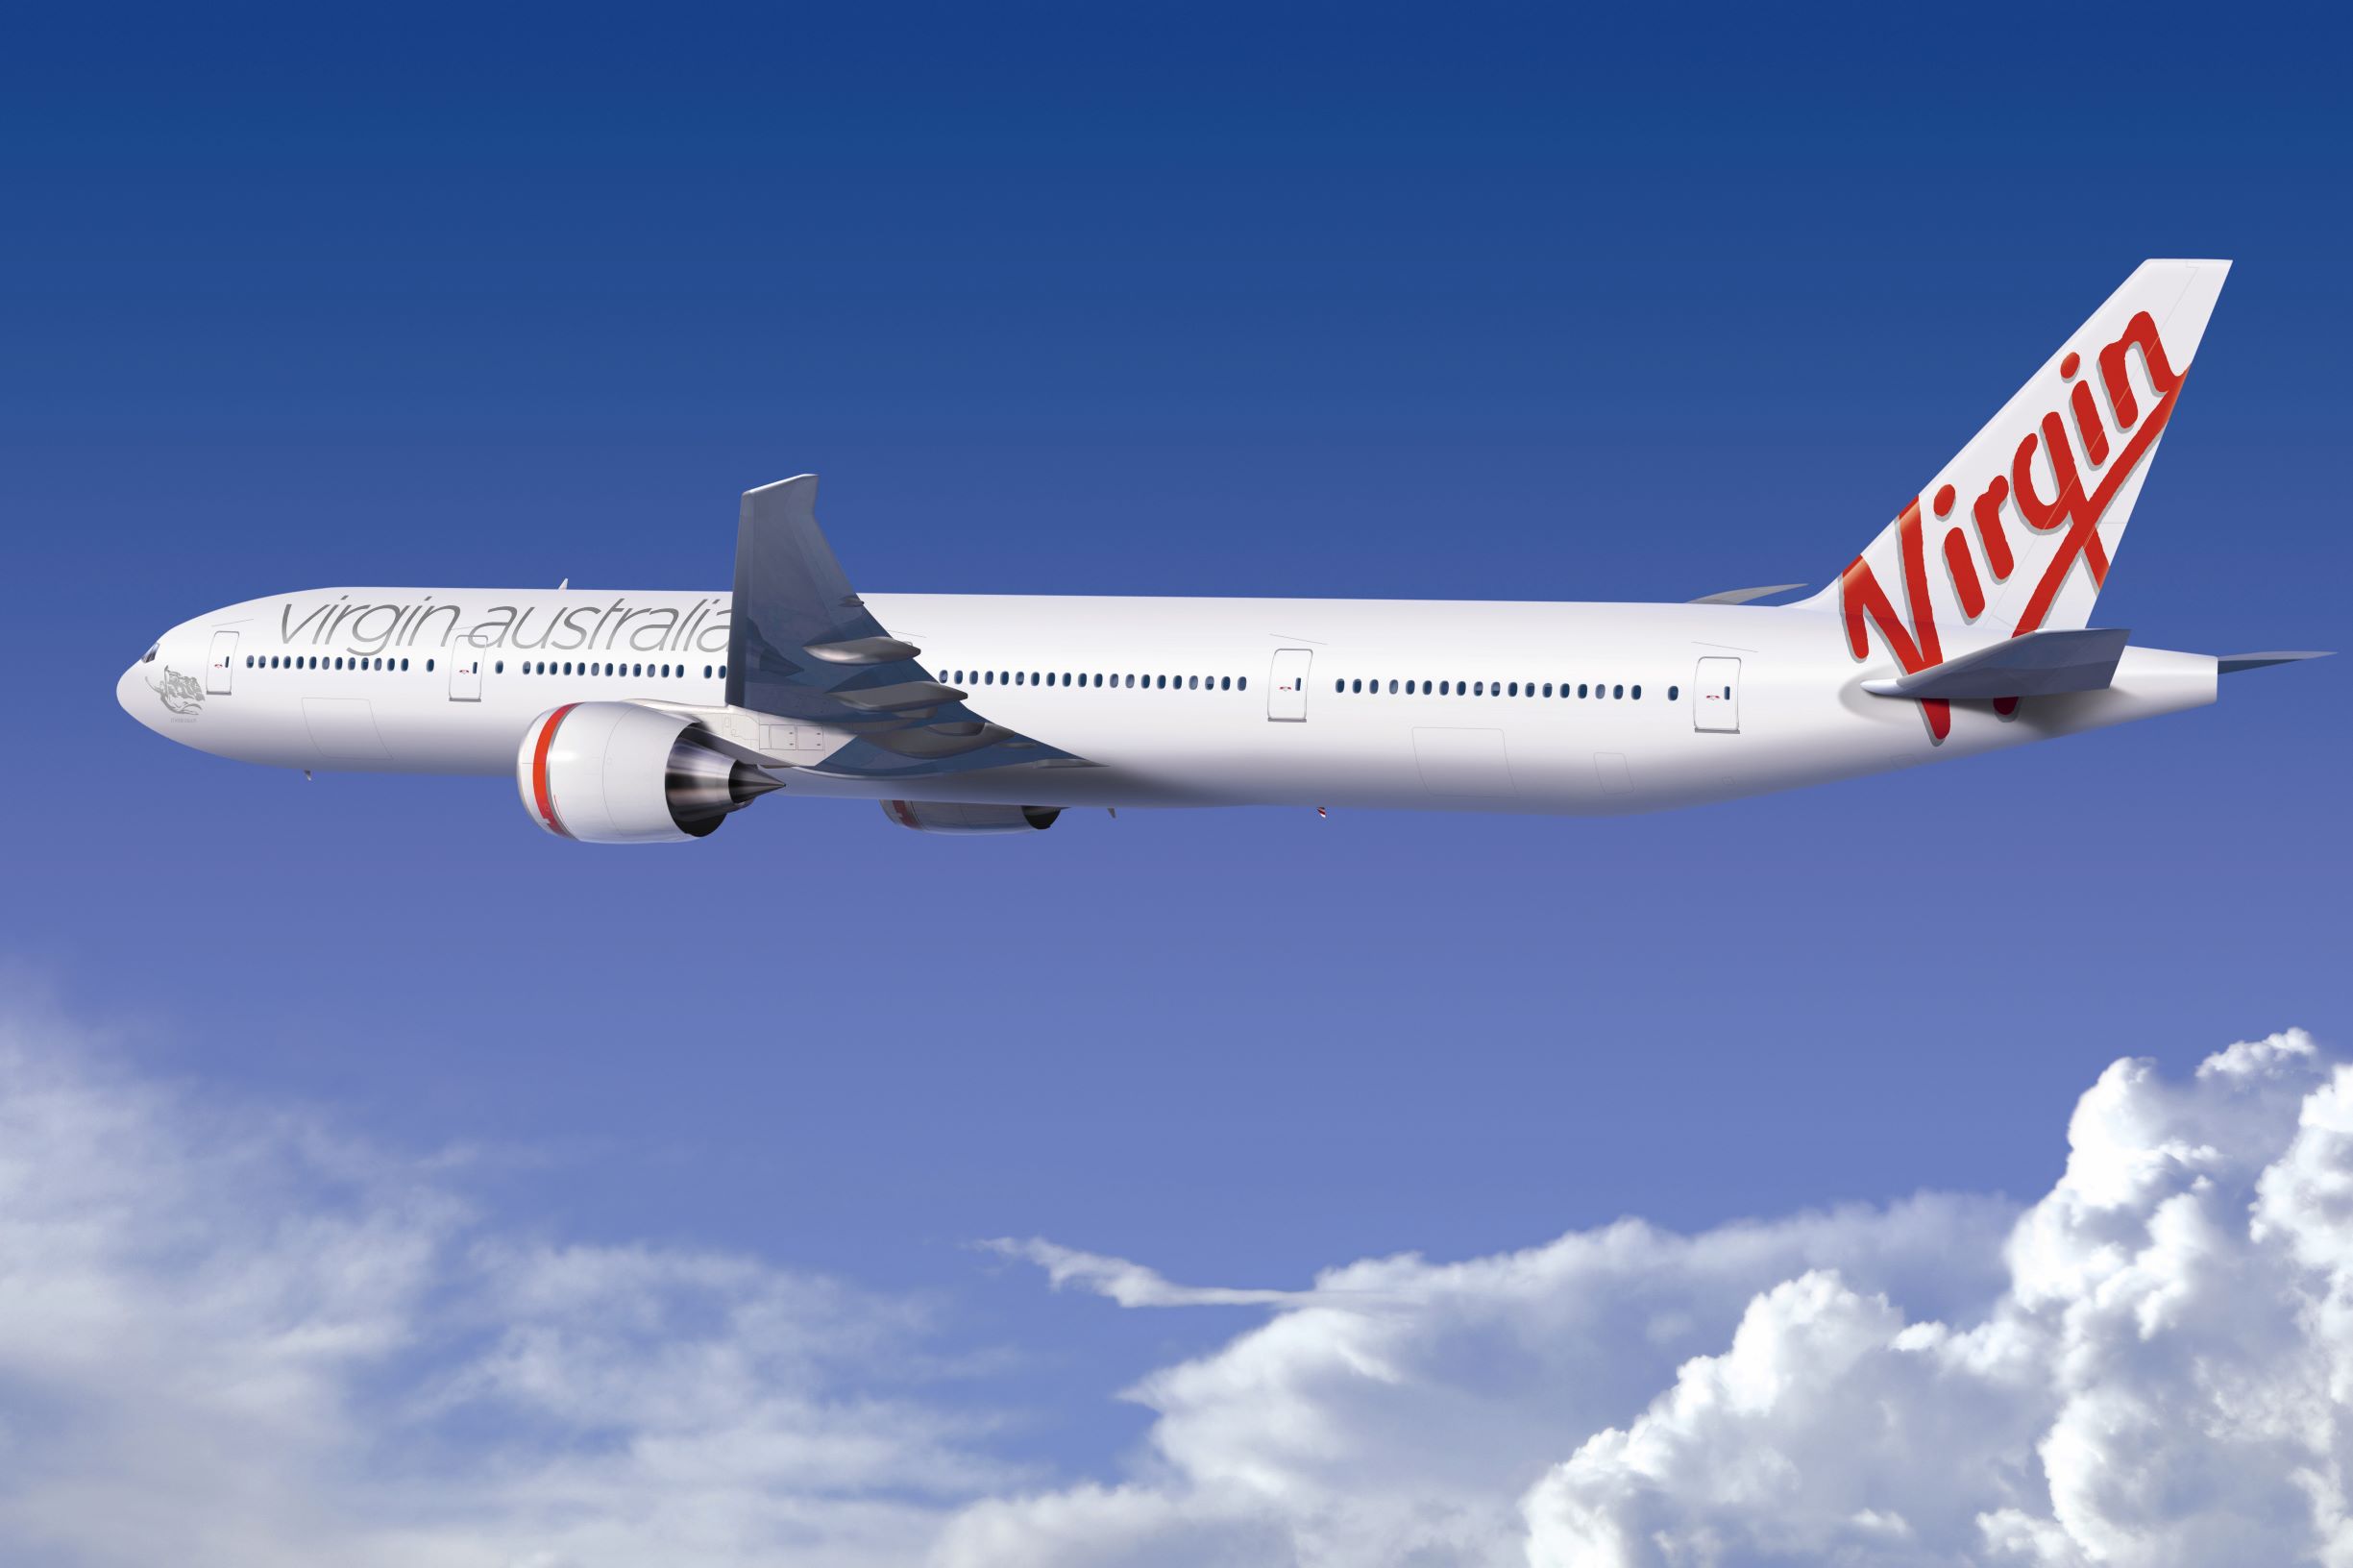 Virgin Australia relaunch plan announced today